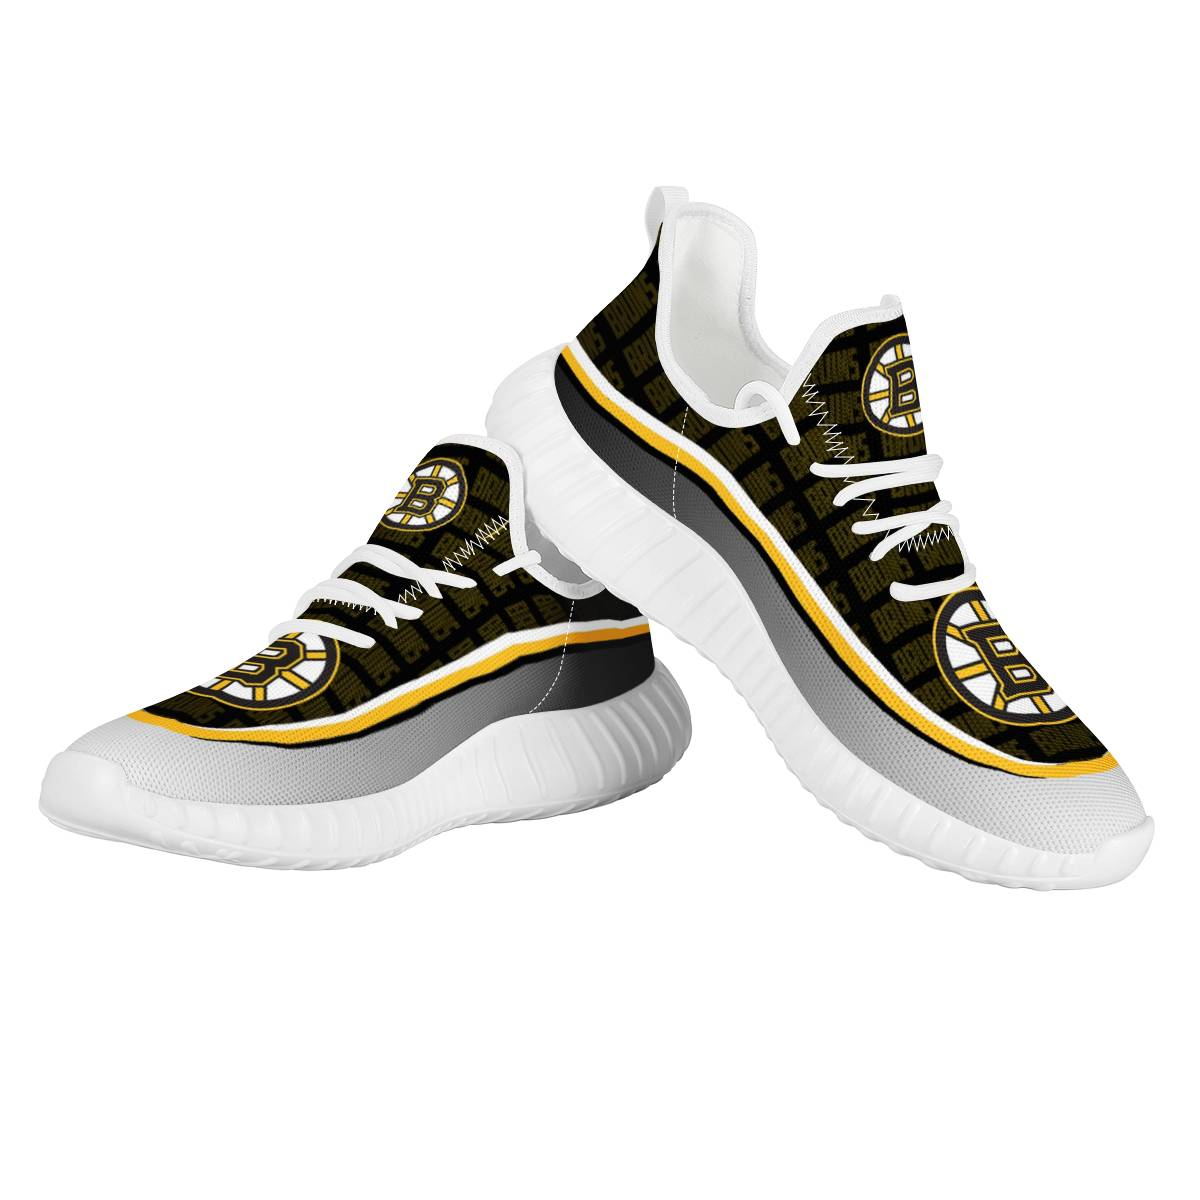 Women's NHL Boston Bruins Mesh Knit Sneakers/Shoes 001